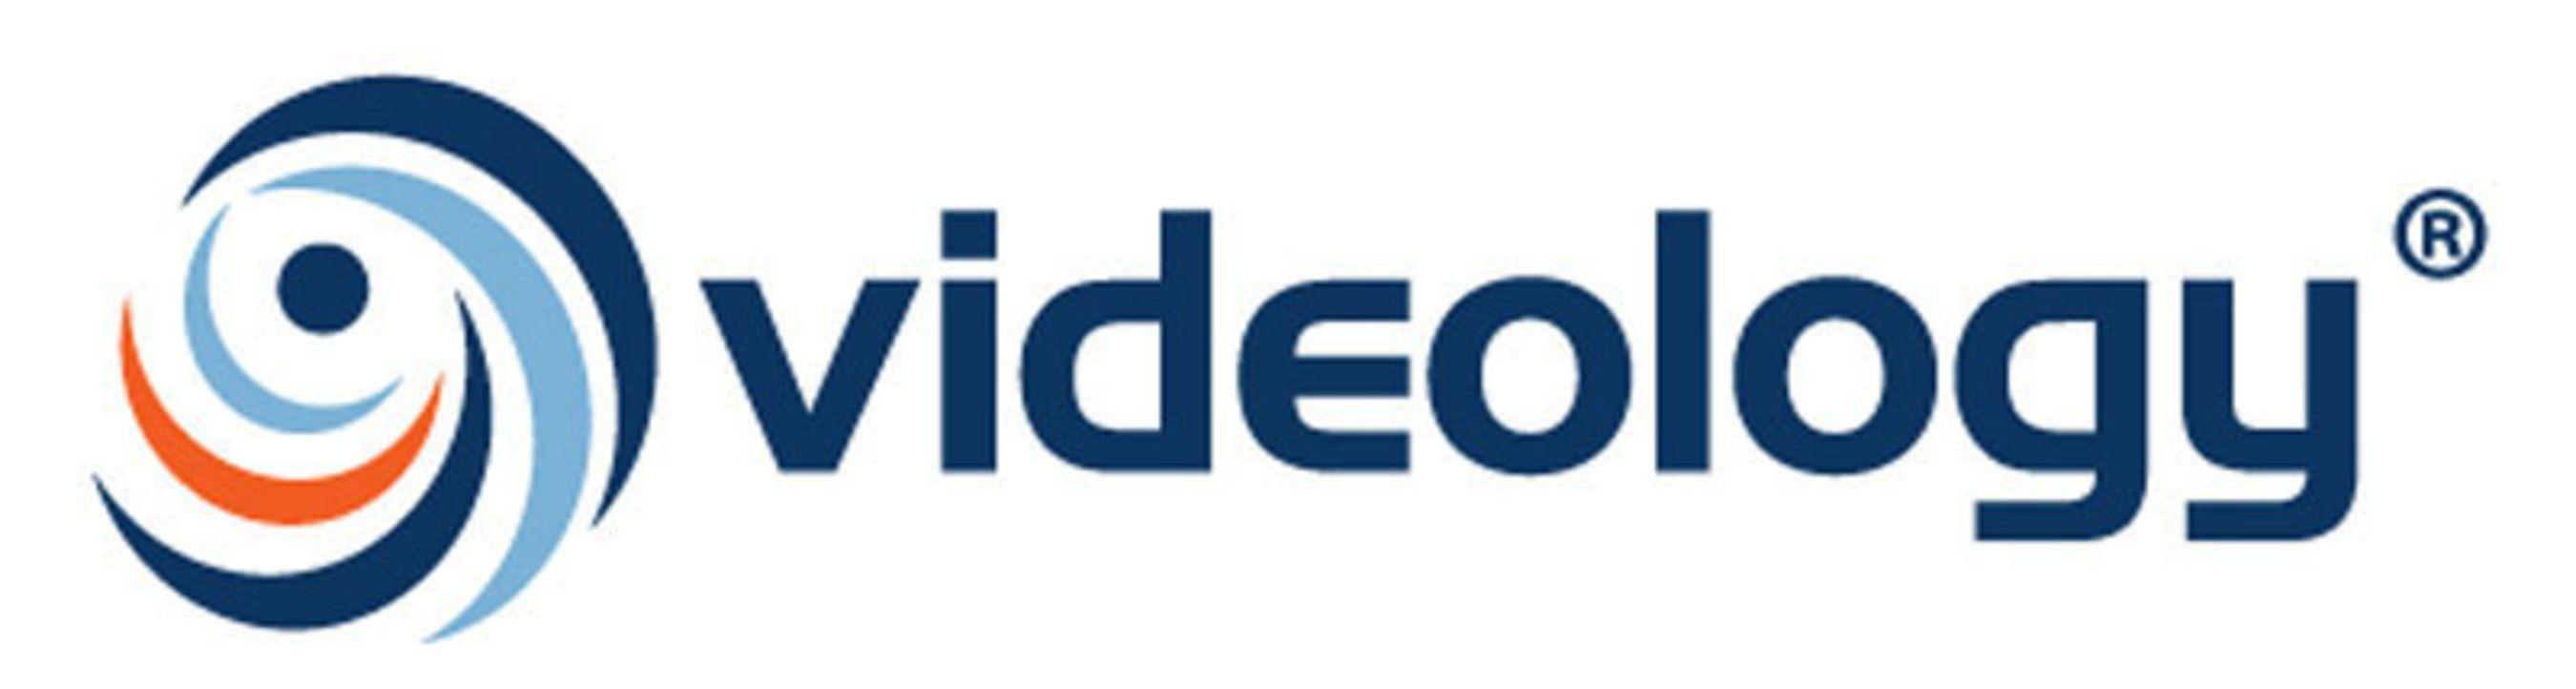 Videology Logo - Videology Releases Case Studies on Cross-Screen TV and Digital Video ...